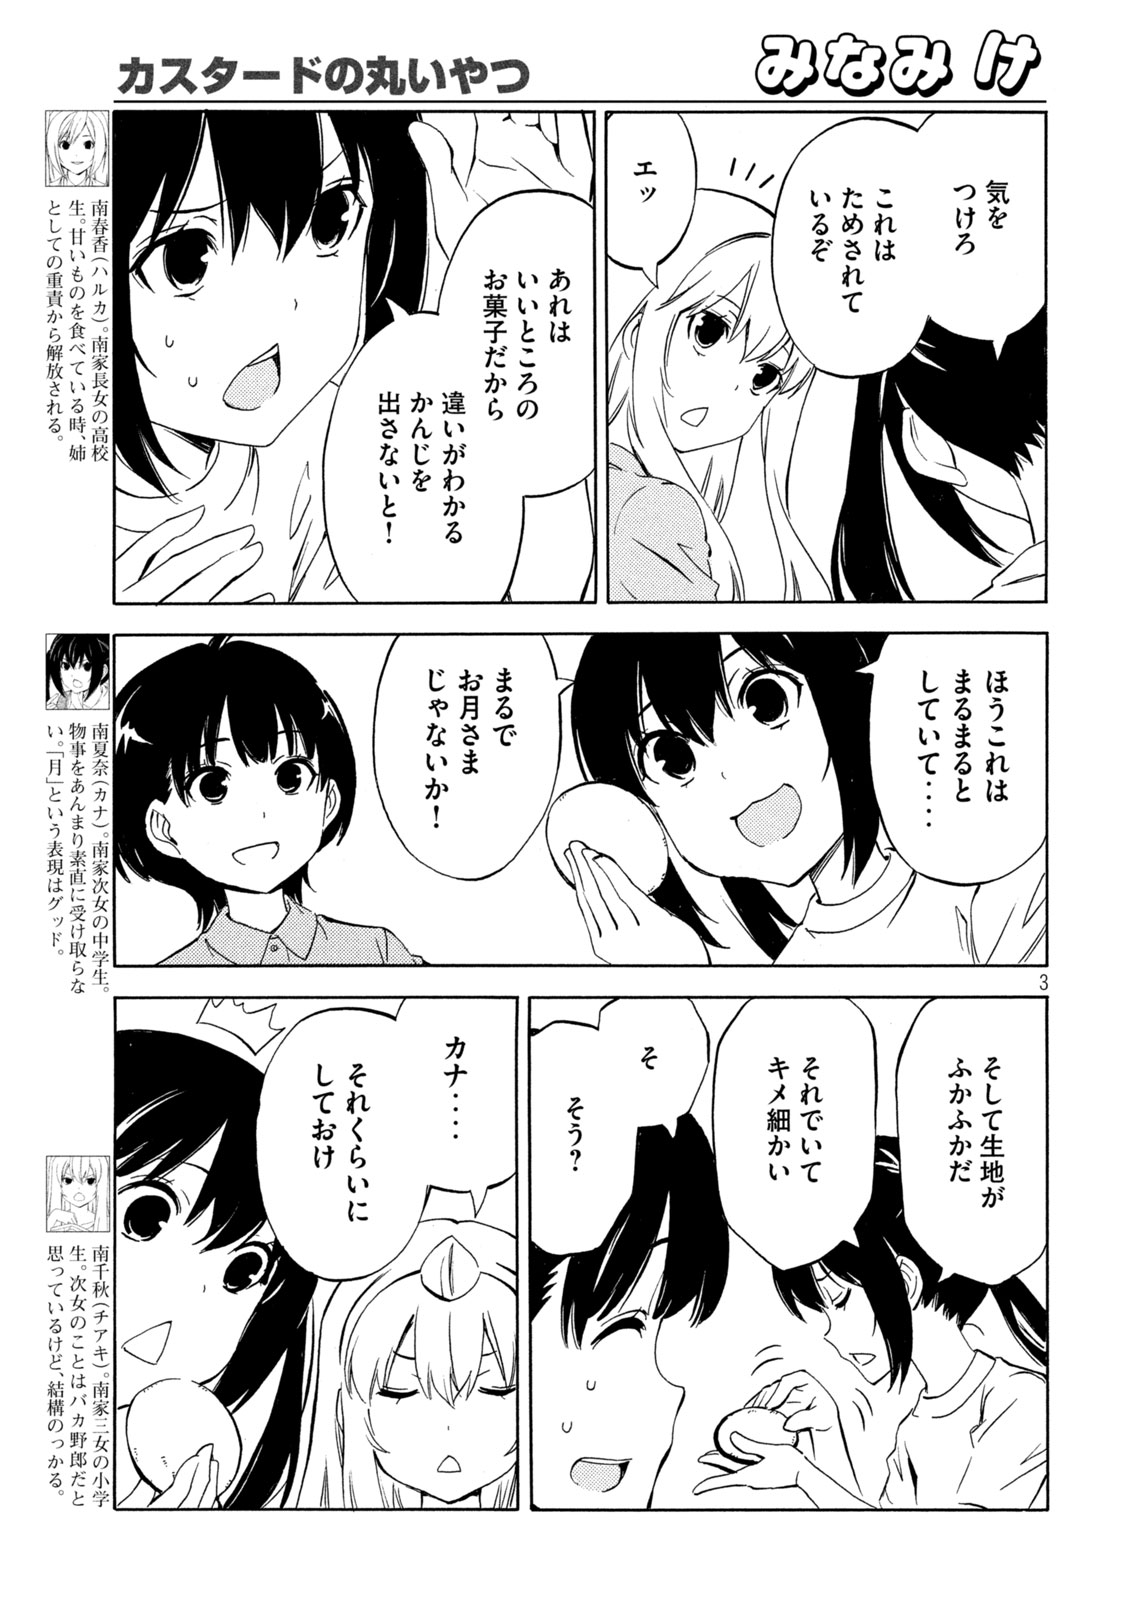 Minami-ke - Chapter 486 - Page 3